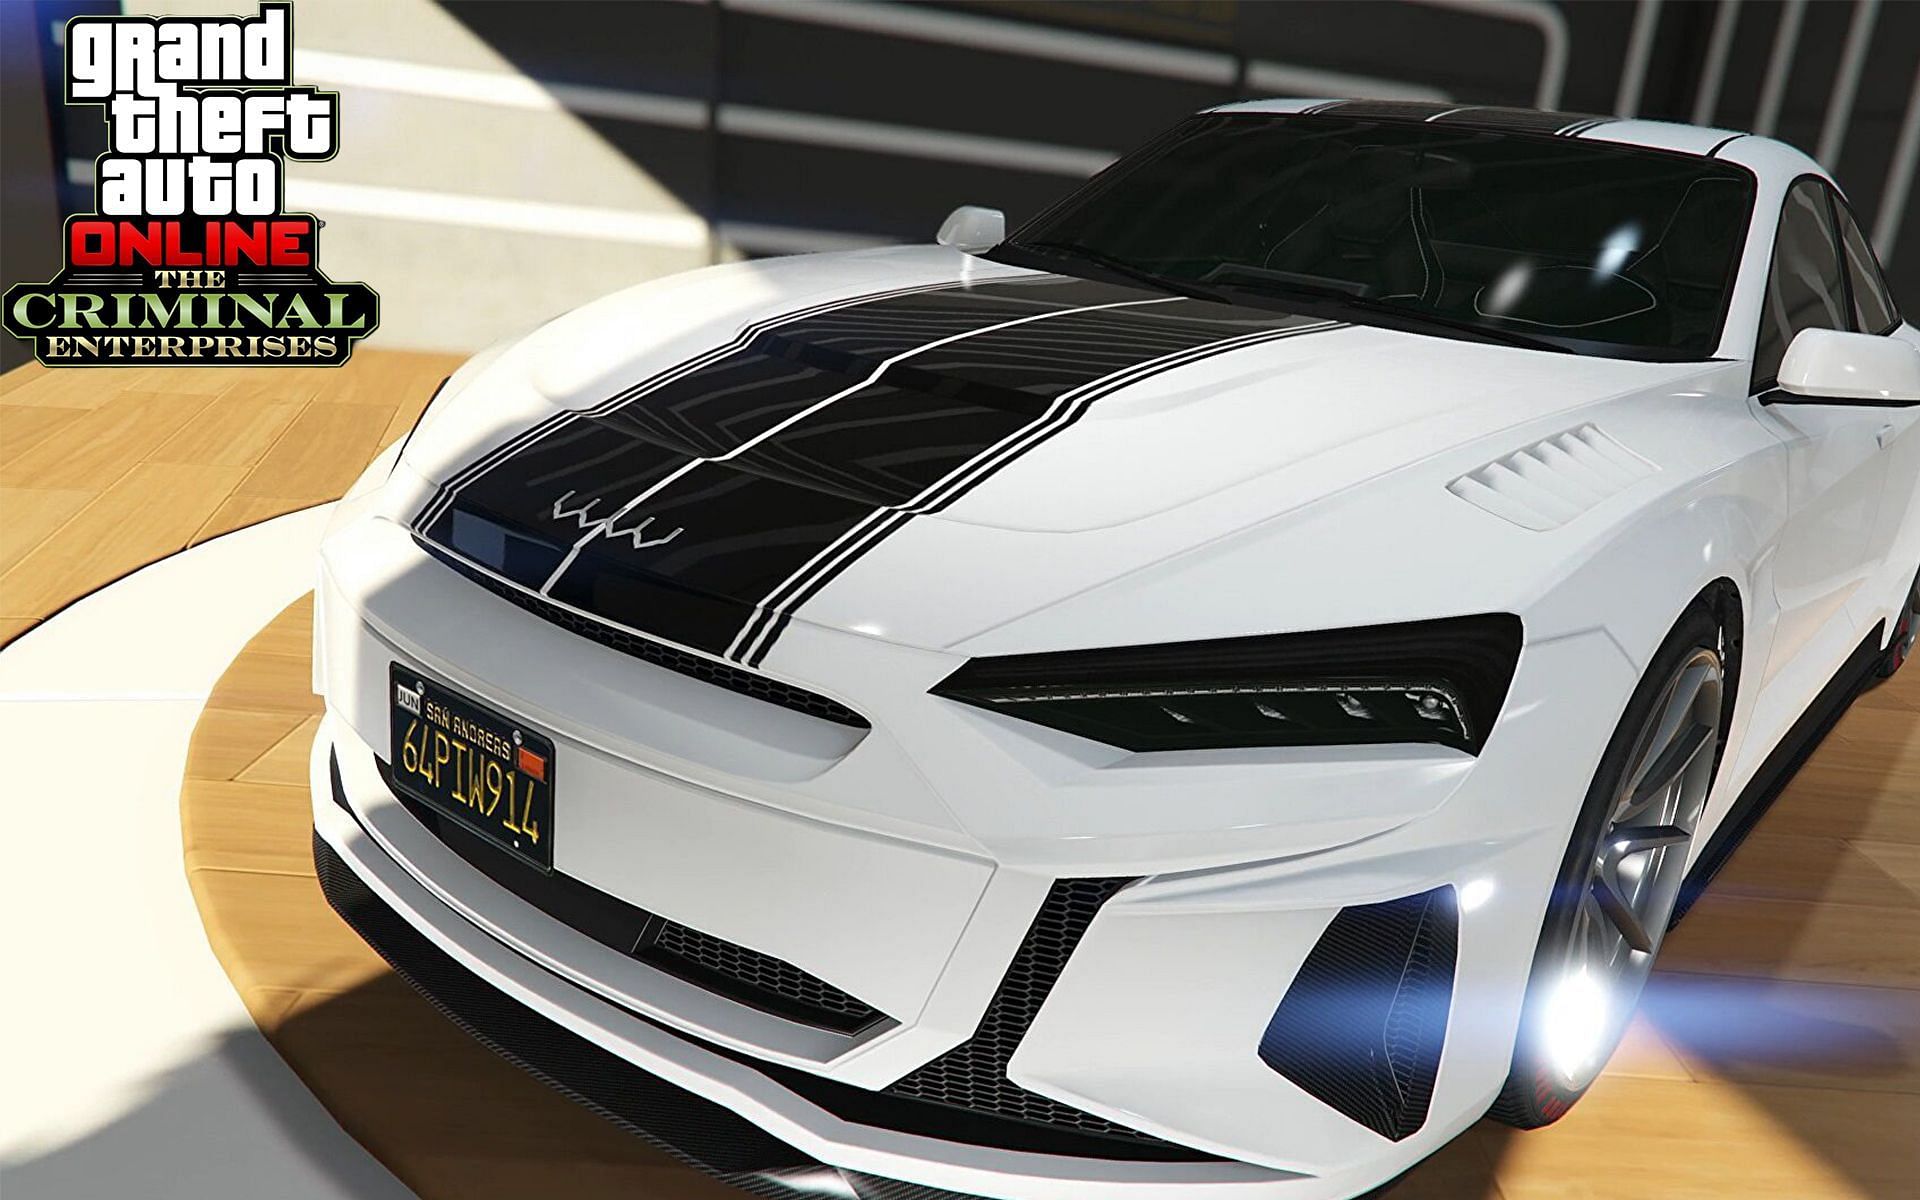 GTA Online will get allegedly 18 new vehicles during the Criminal Enterprises DLC (Image via Rockstar Games)